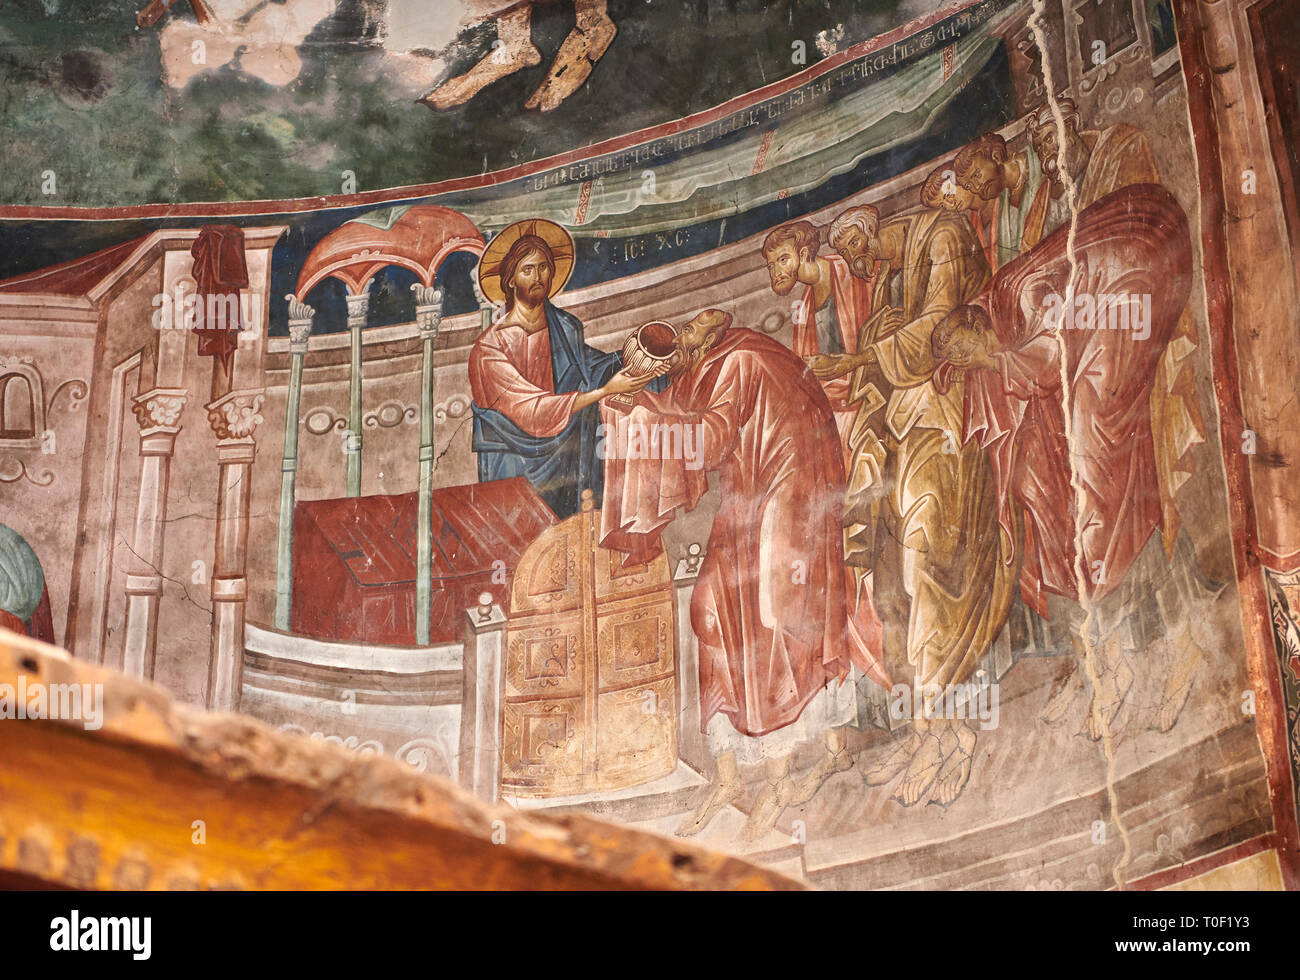 Pictures & images of the interior frescoes of Ubisa St. George Georgian Orthodox medieval monastery, Georgia (country)  The 14th century lavish interi Stock Photo